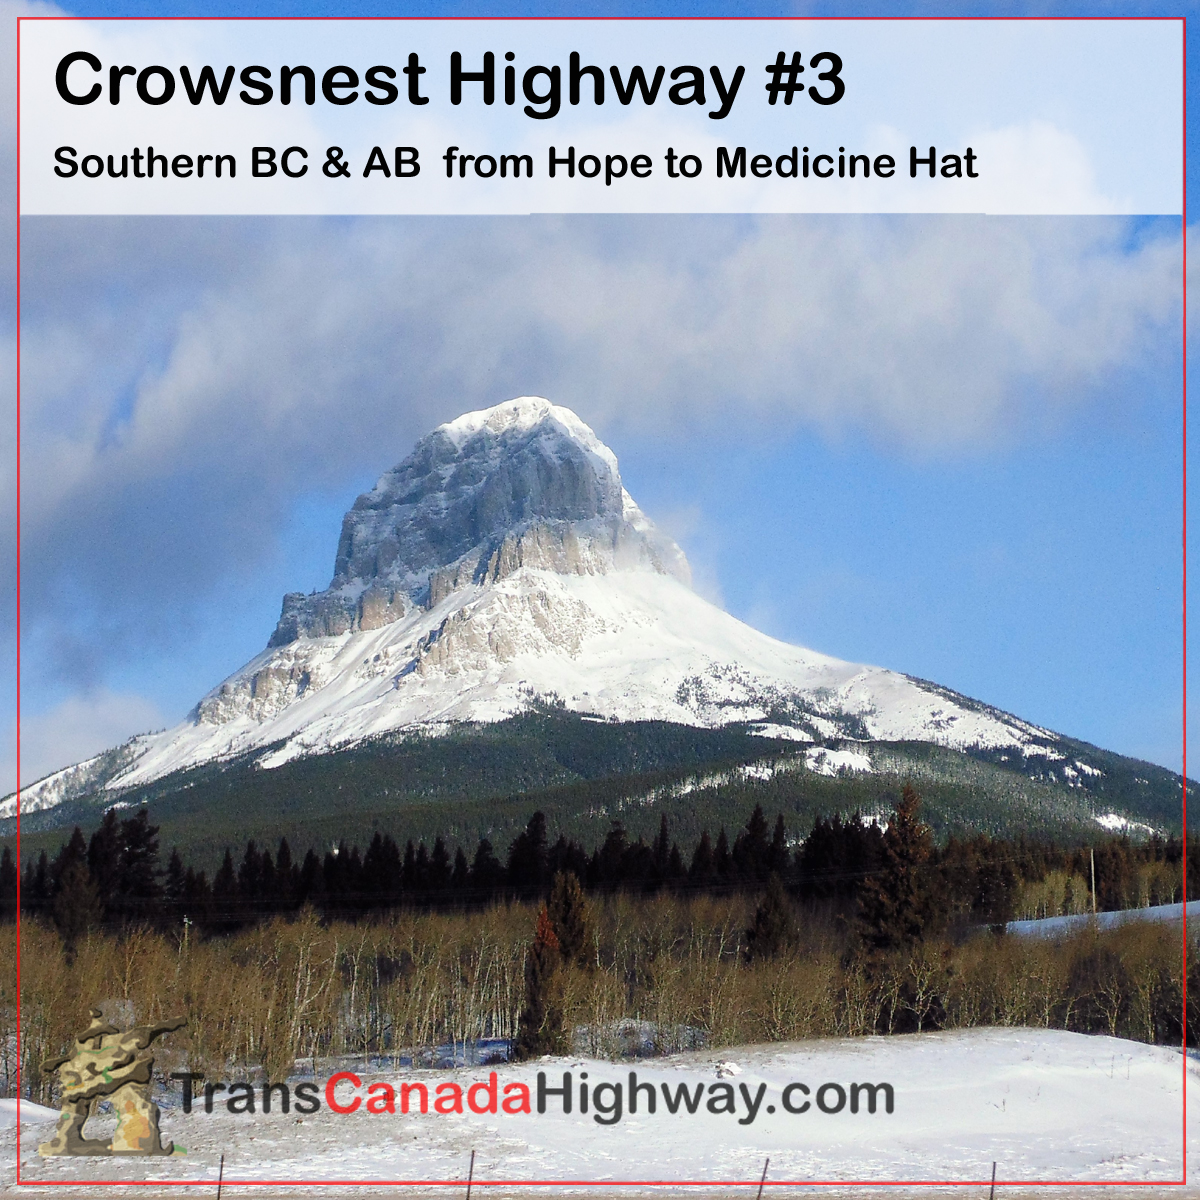 TransCanadaHighway.com - Crowsnest Highway #3